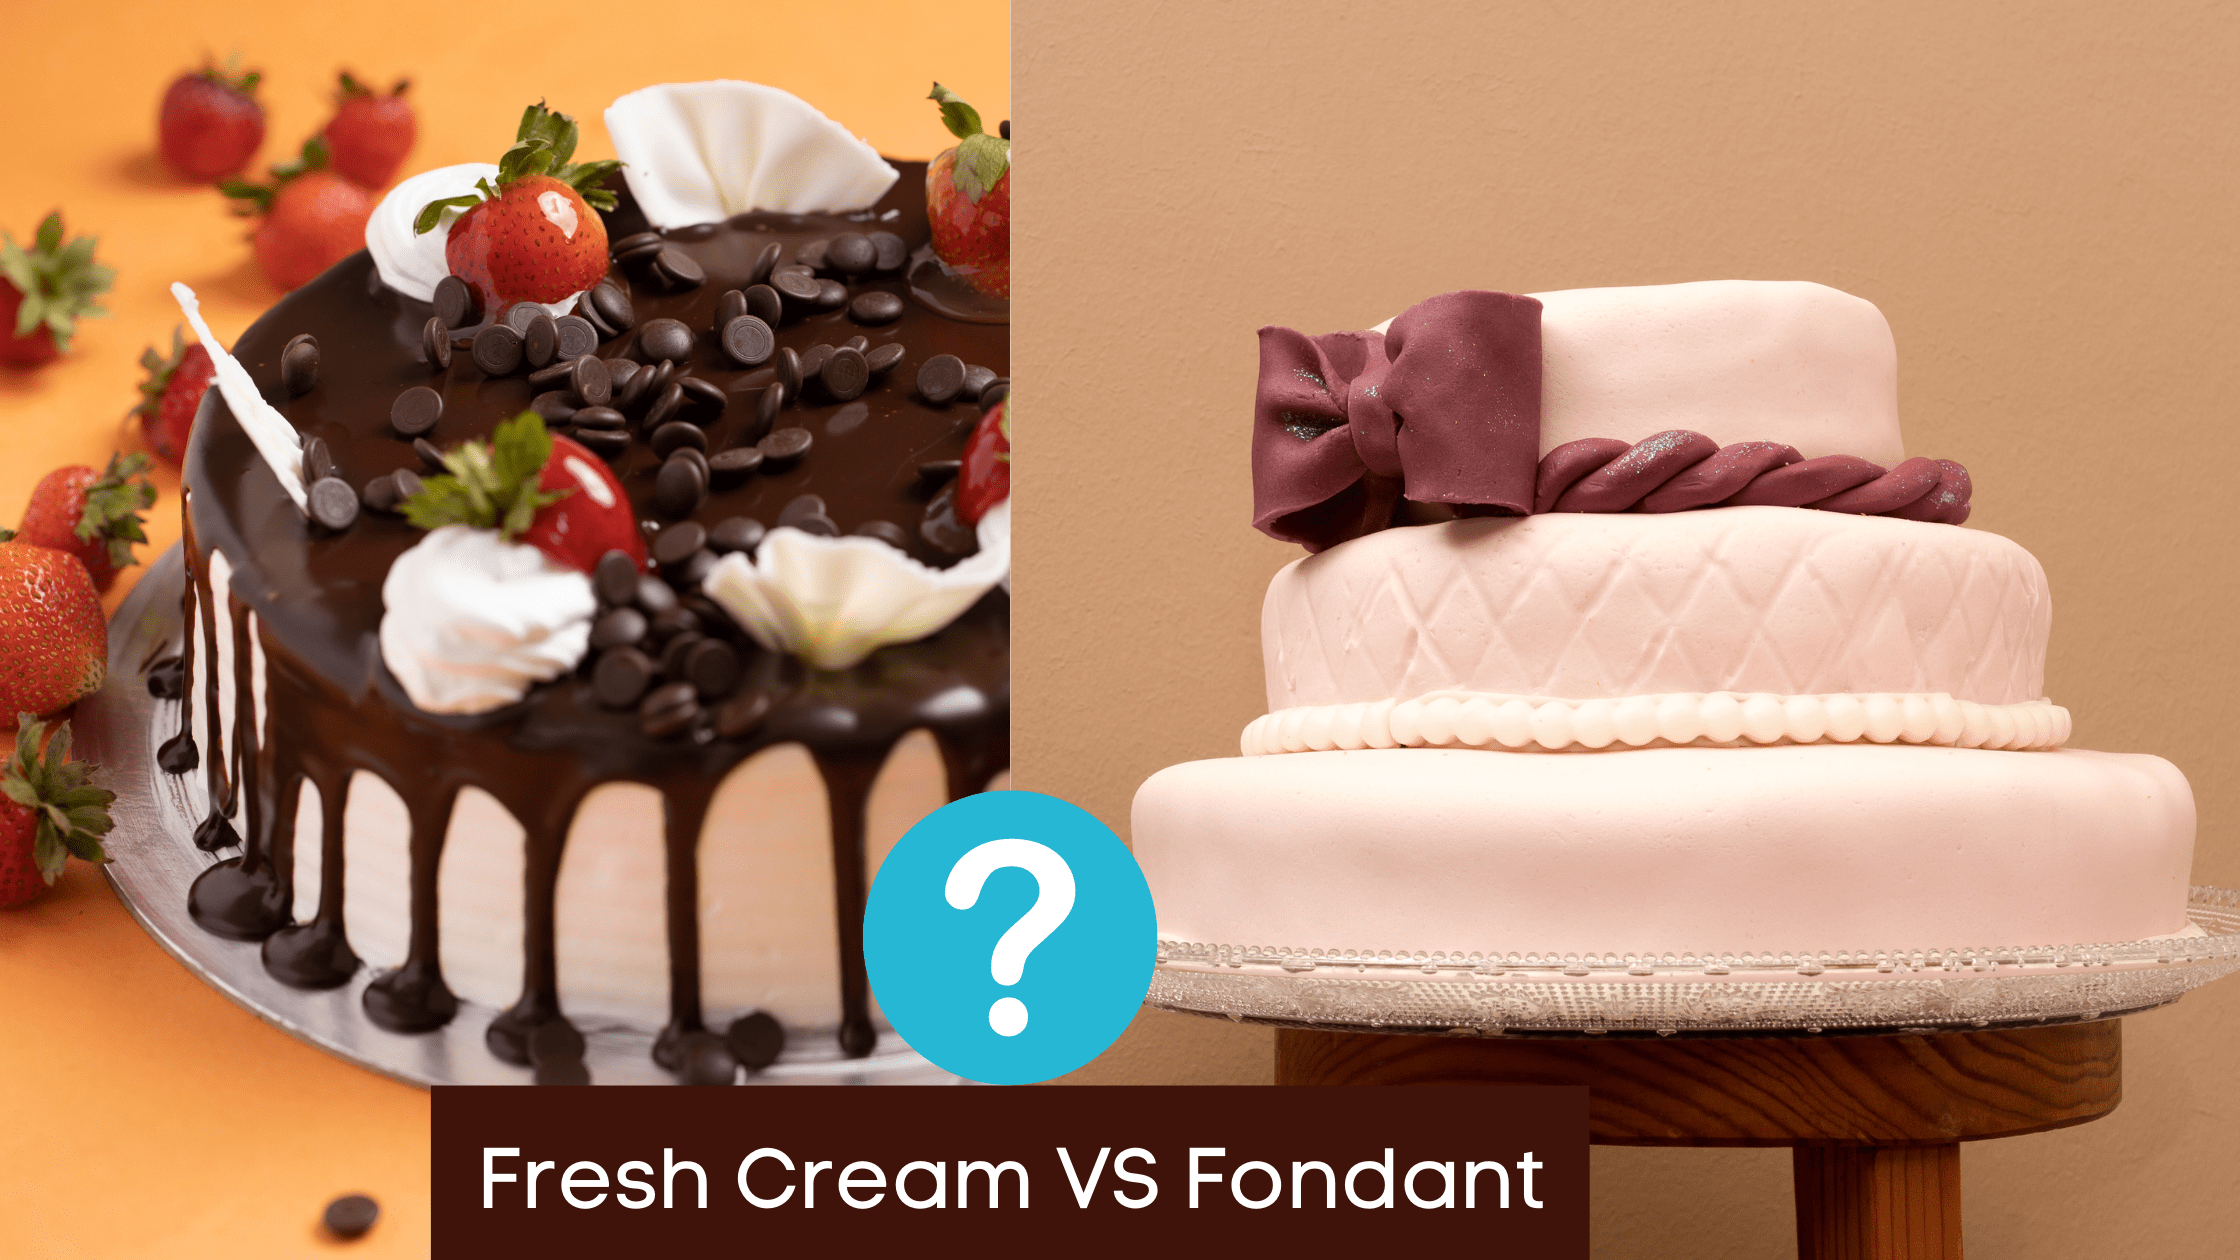 Fresh Cream vs Fondant cake